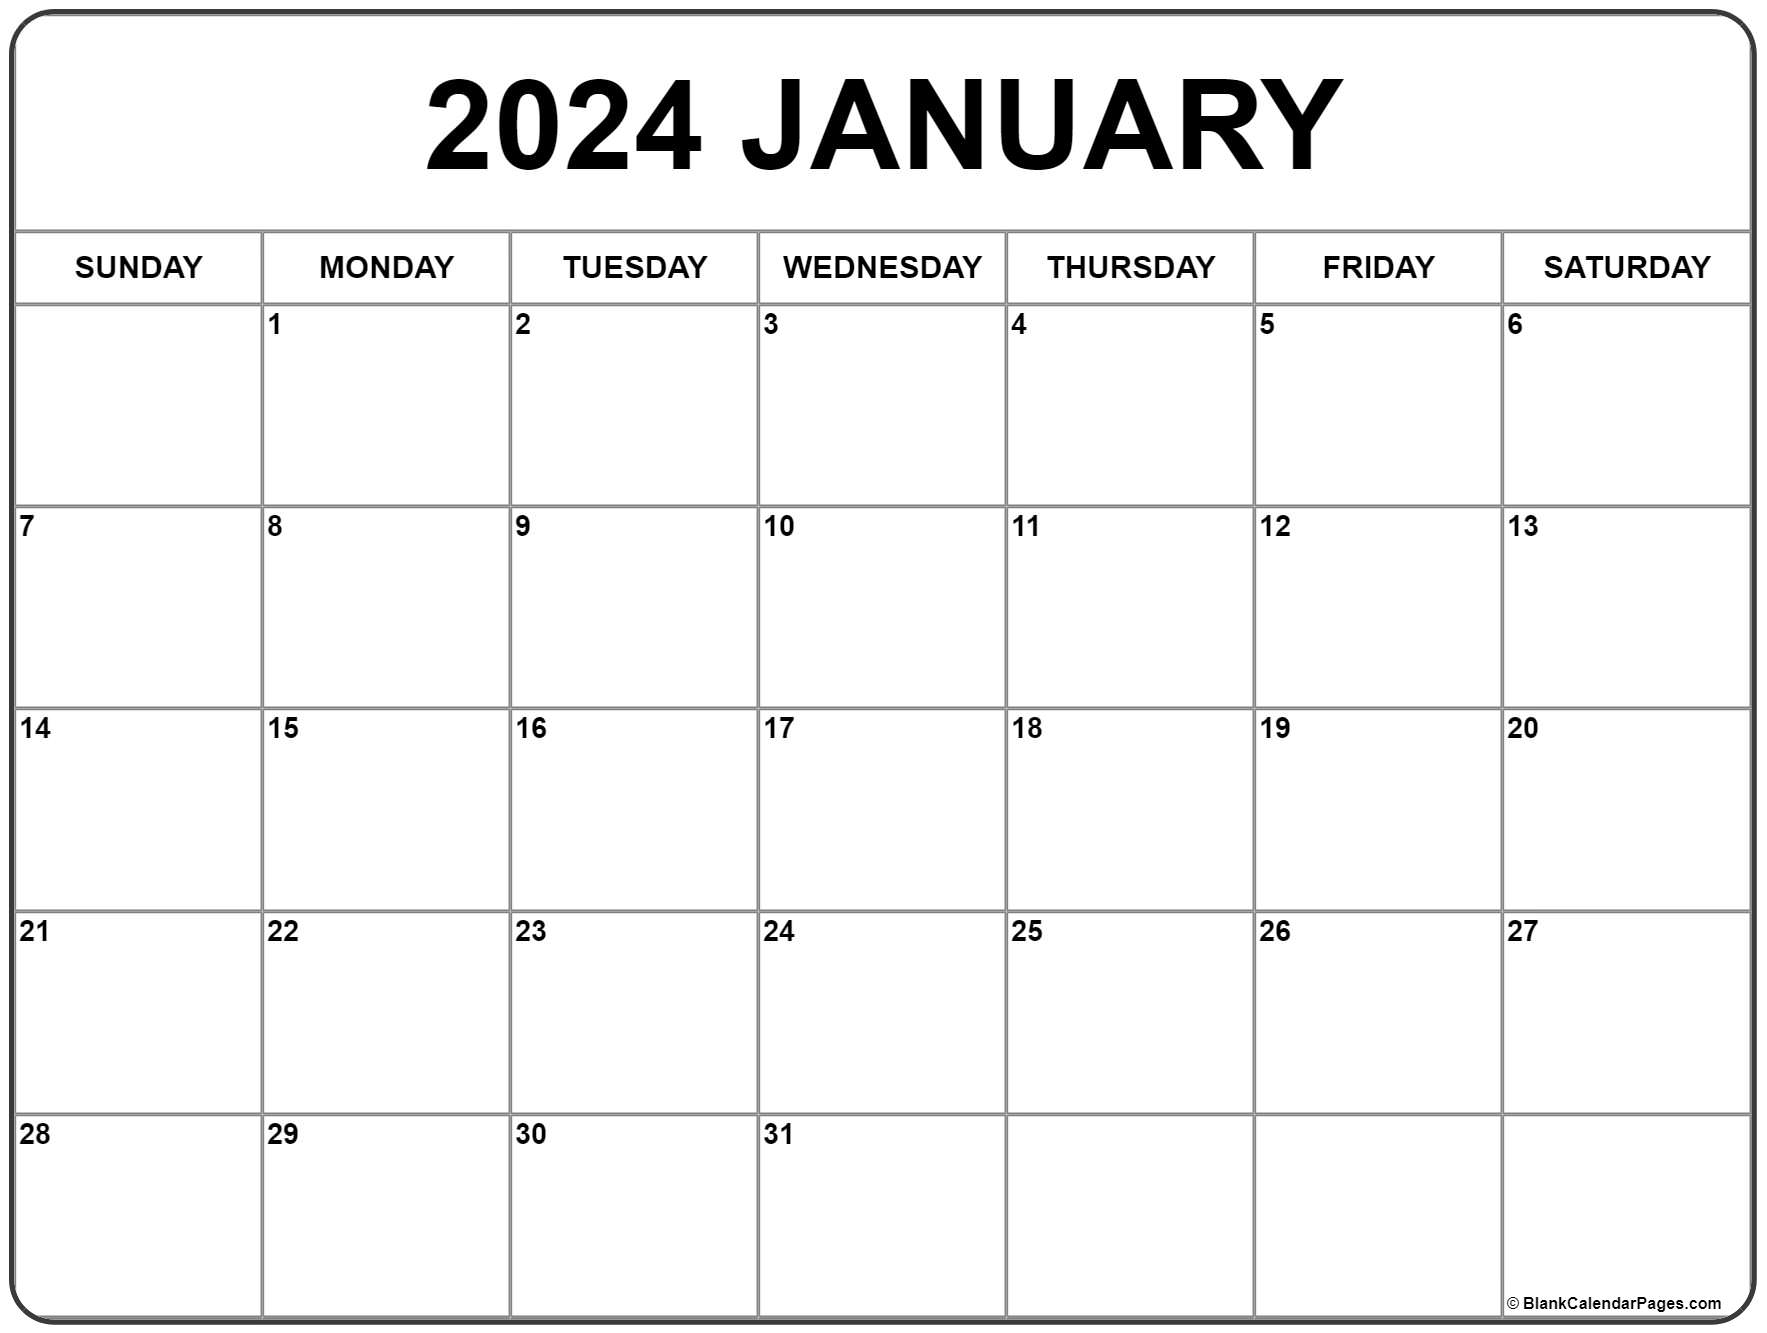 Calendar For January 2021 January 2021 calendar | free printable monthly calendars